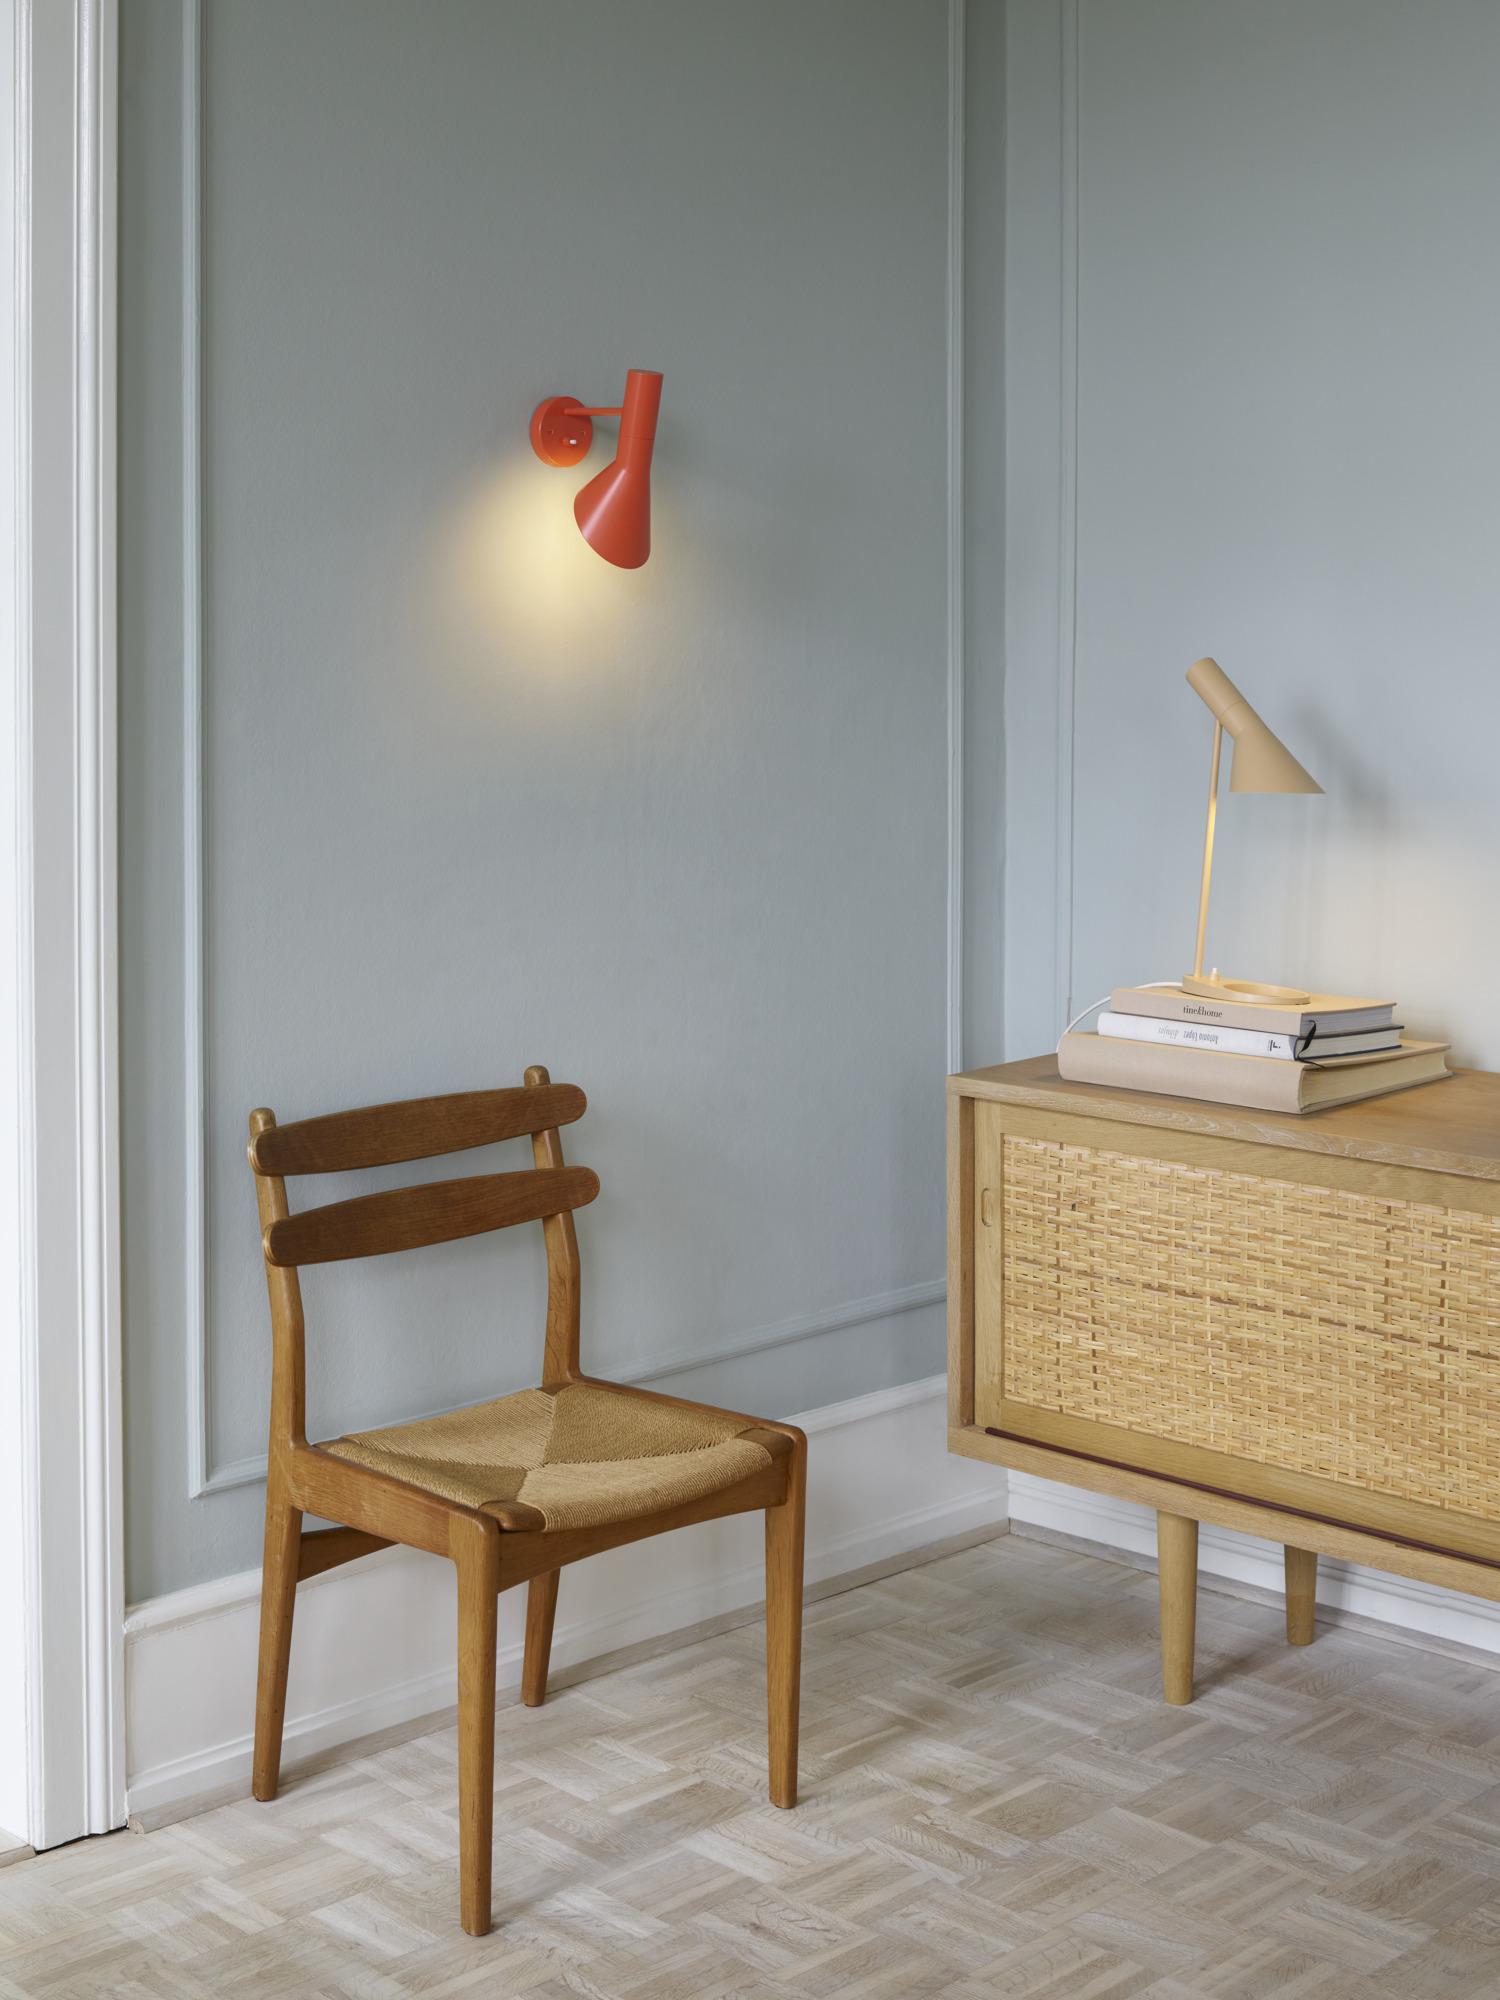 Cast Arne Jacobsen 'AJ Mini' Table Lamp in Stainless Steel for Louis Poulsen For Sale